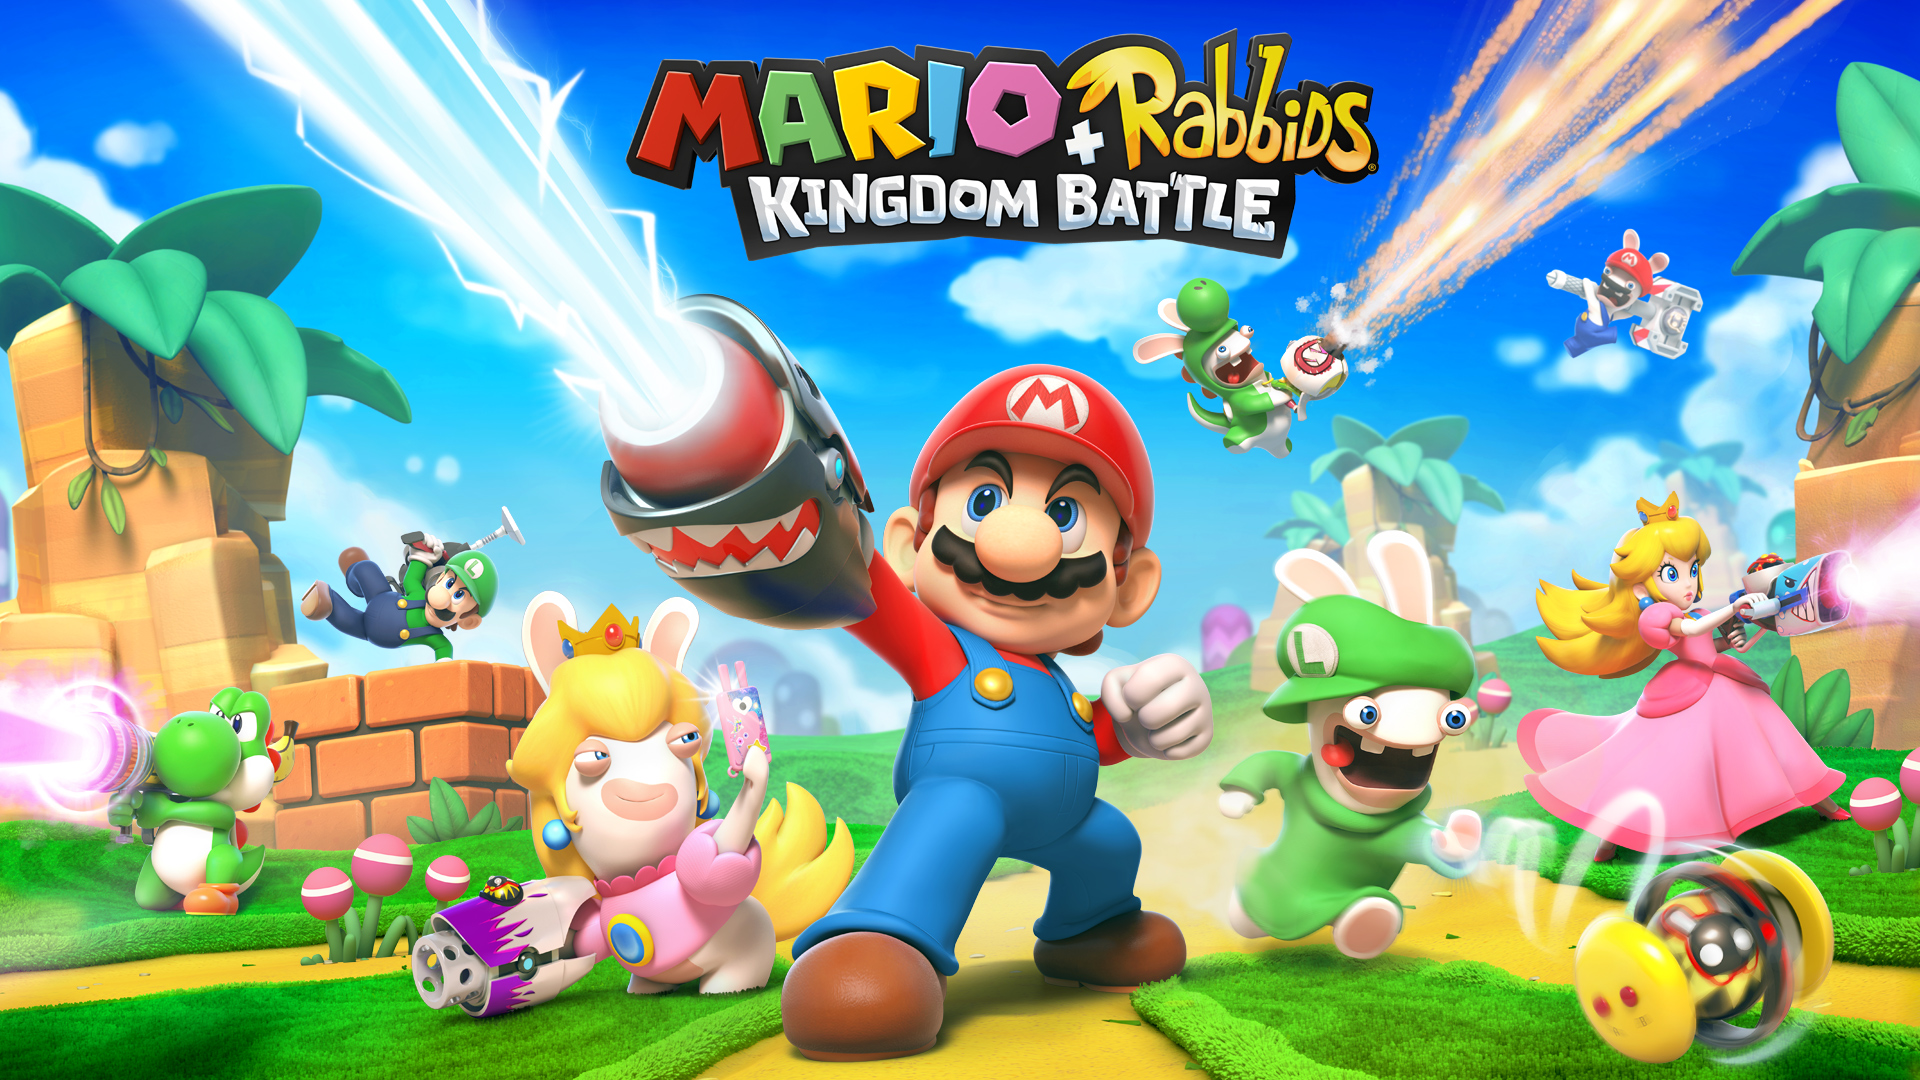 Mario + Rabbids: Kingdom Battle and Pokemon: Let's Go, Eevee